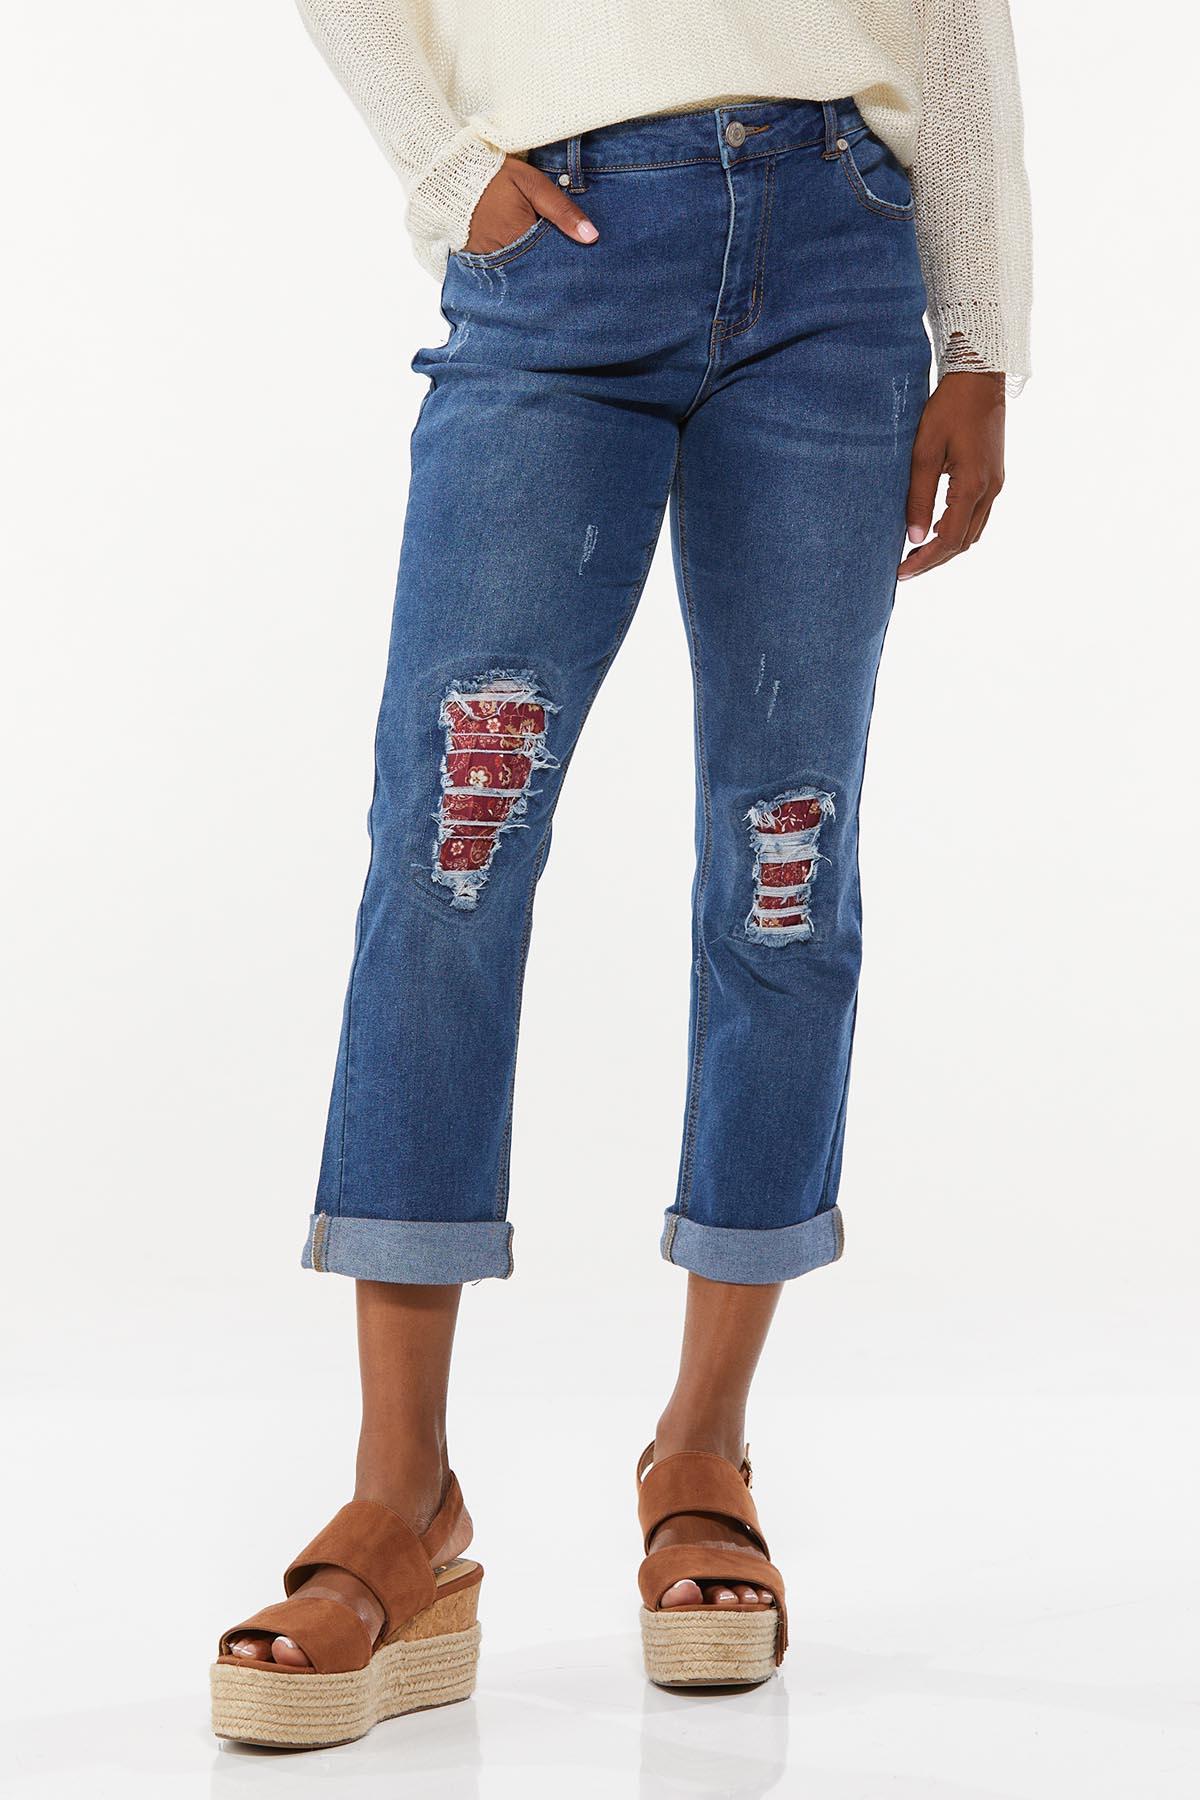 Paisley Patch Jeans